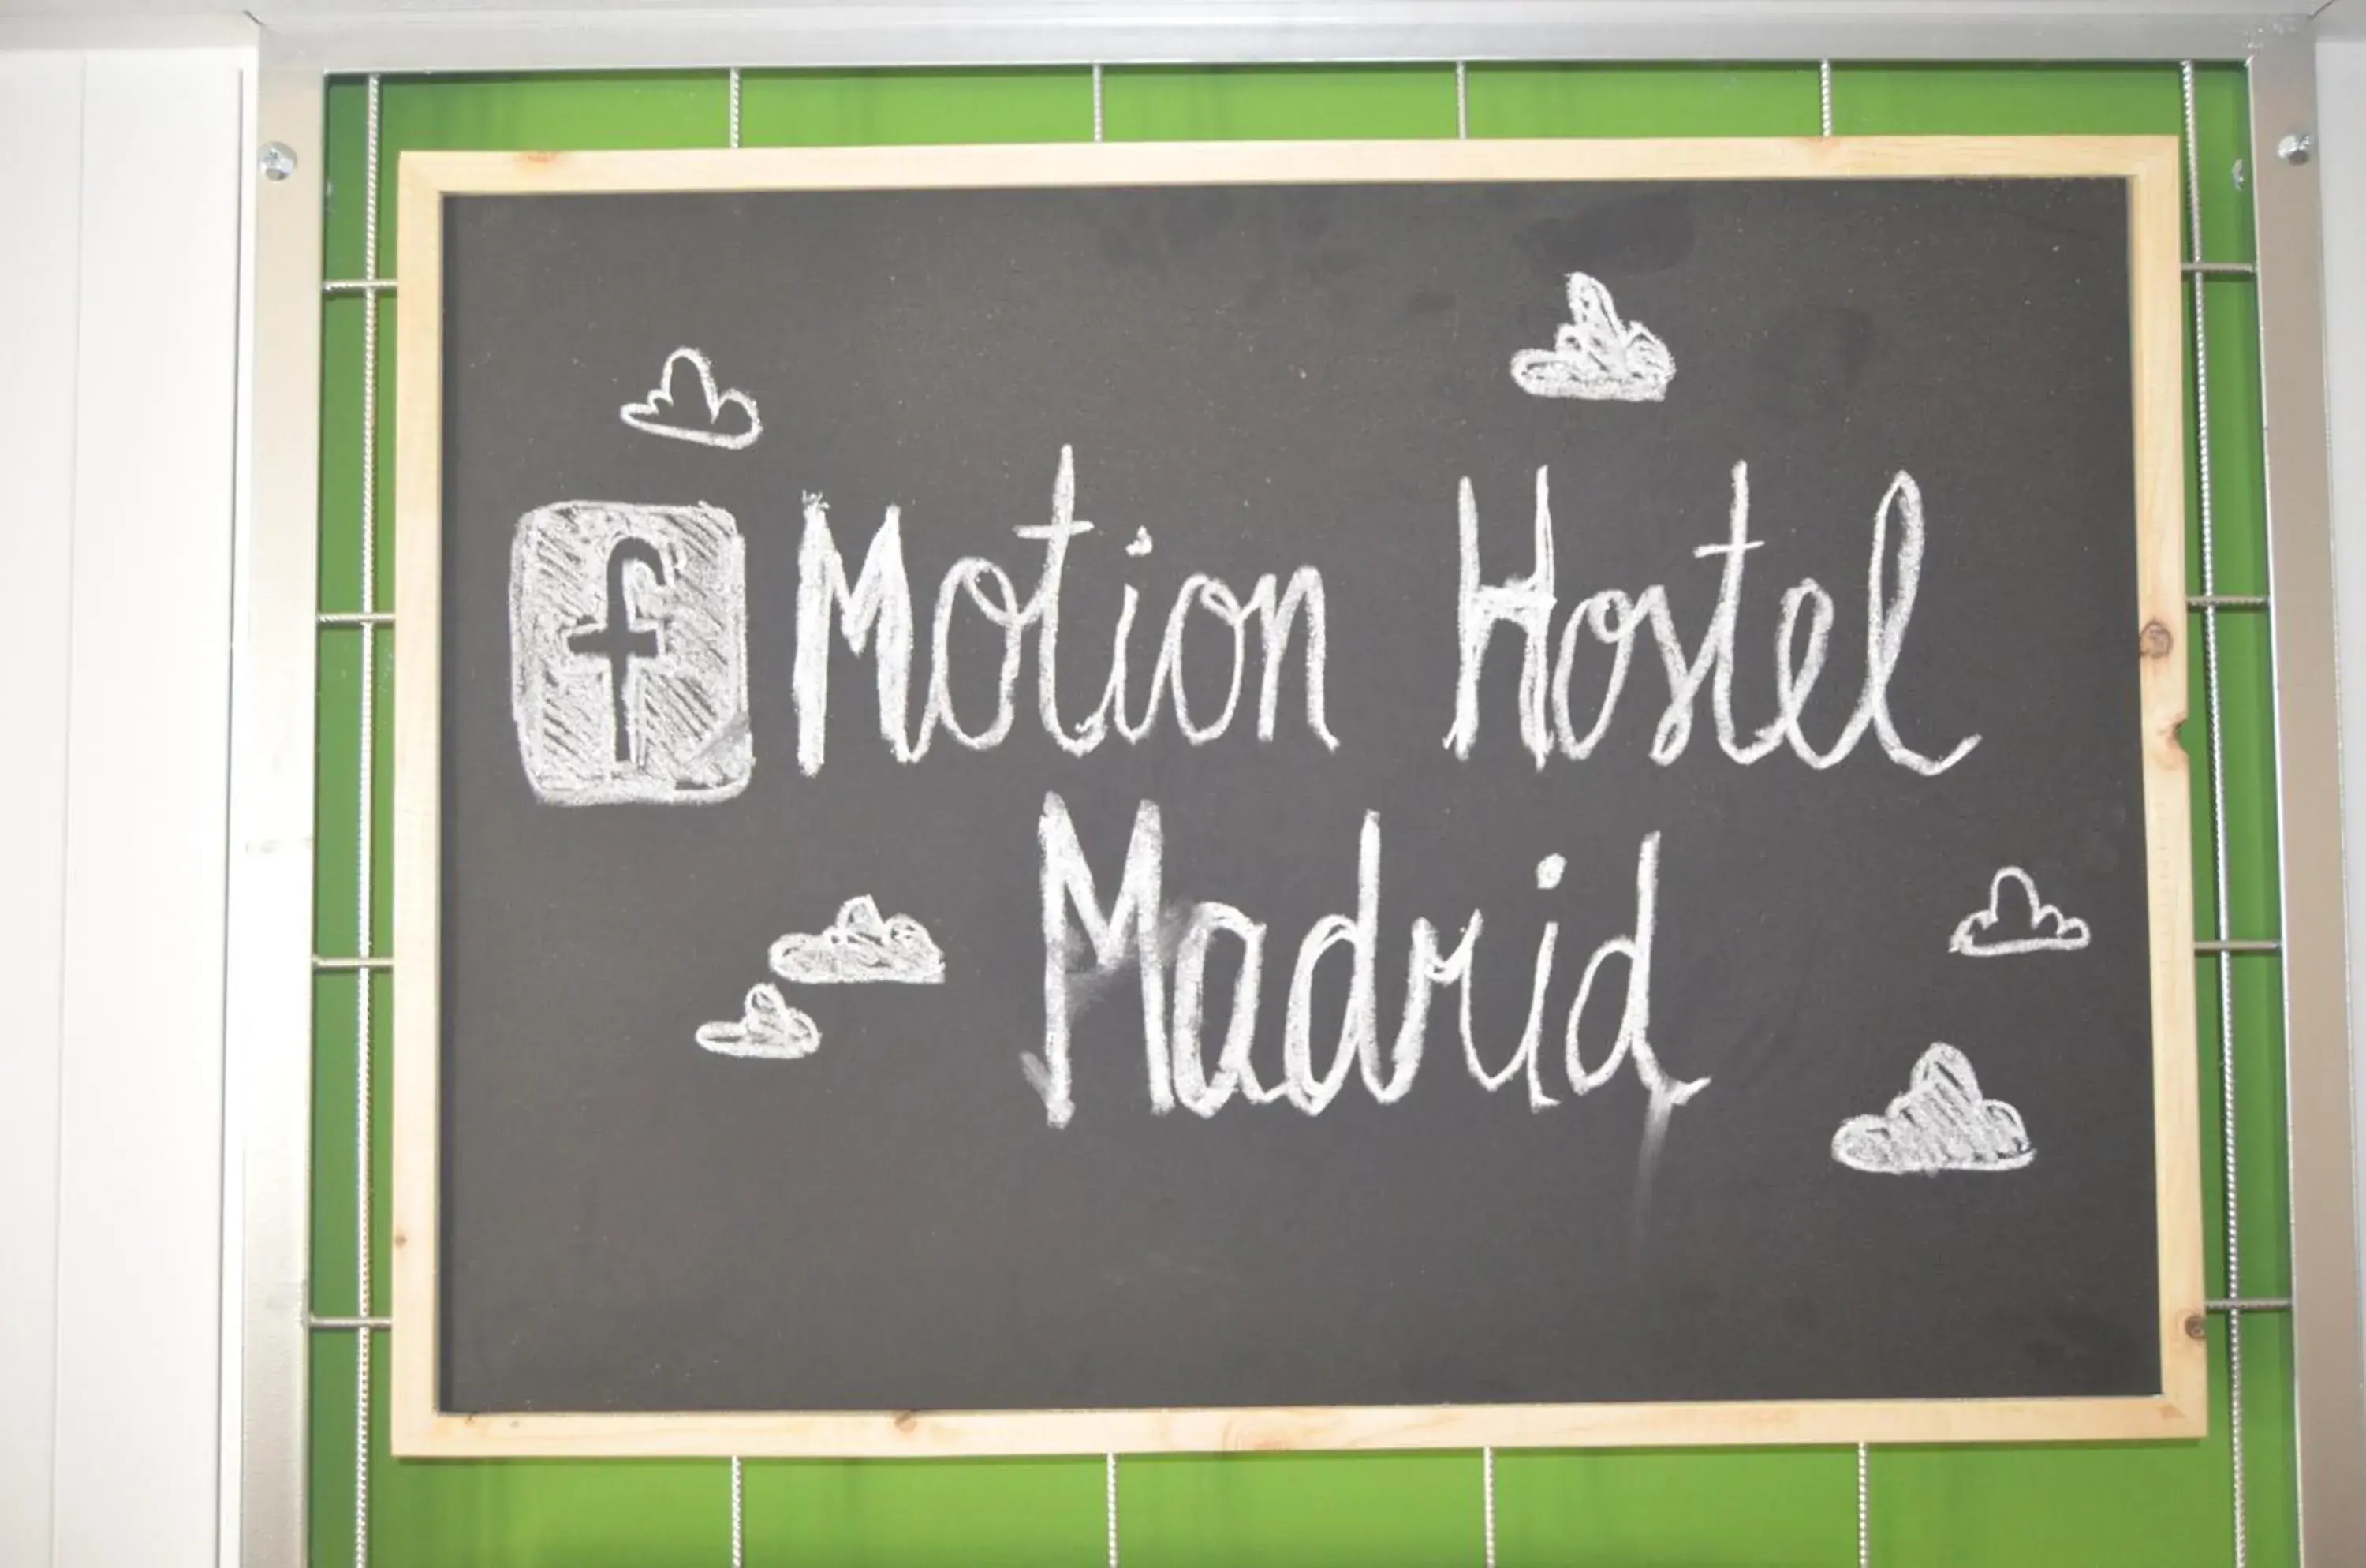 Decorative detail in Madrid Motion Hostels